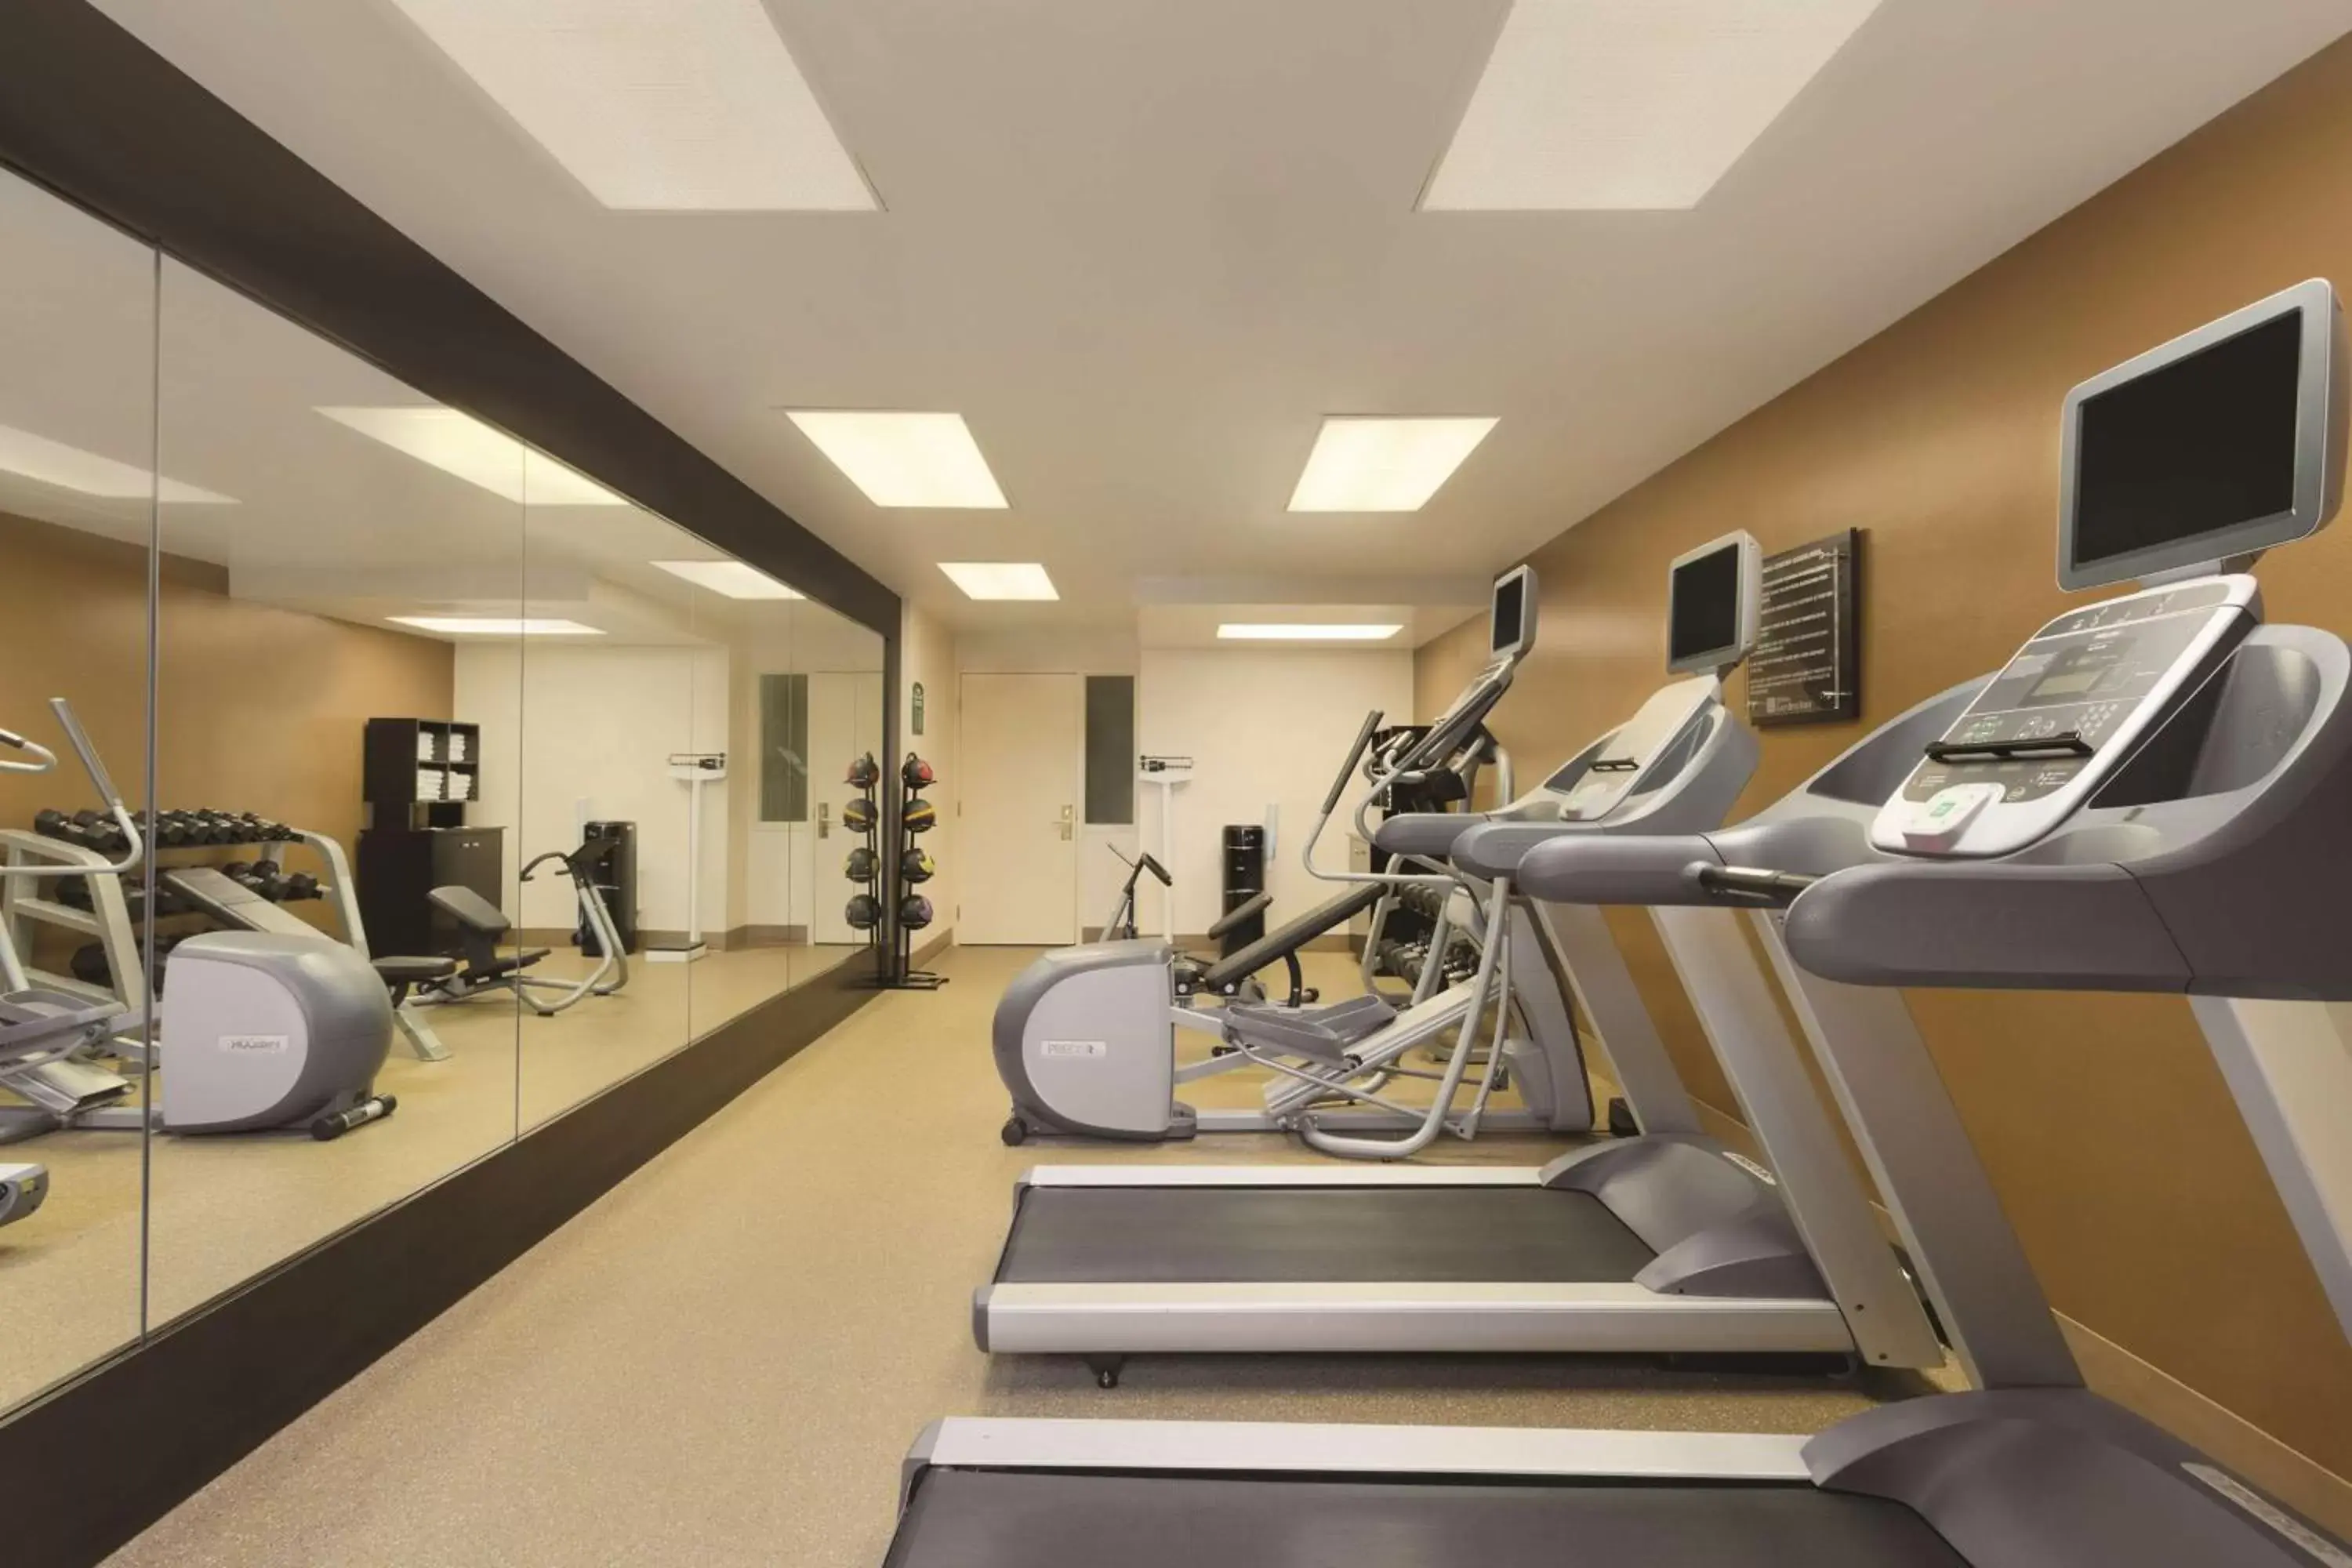 Fitness centre/facilities, Fitness Center/Facilities in Hilton Garden Inn Anaheim/Garden Grove